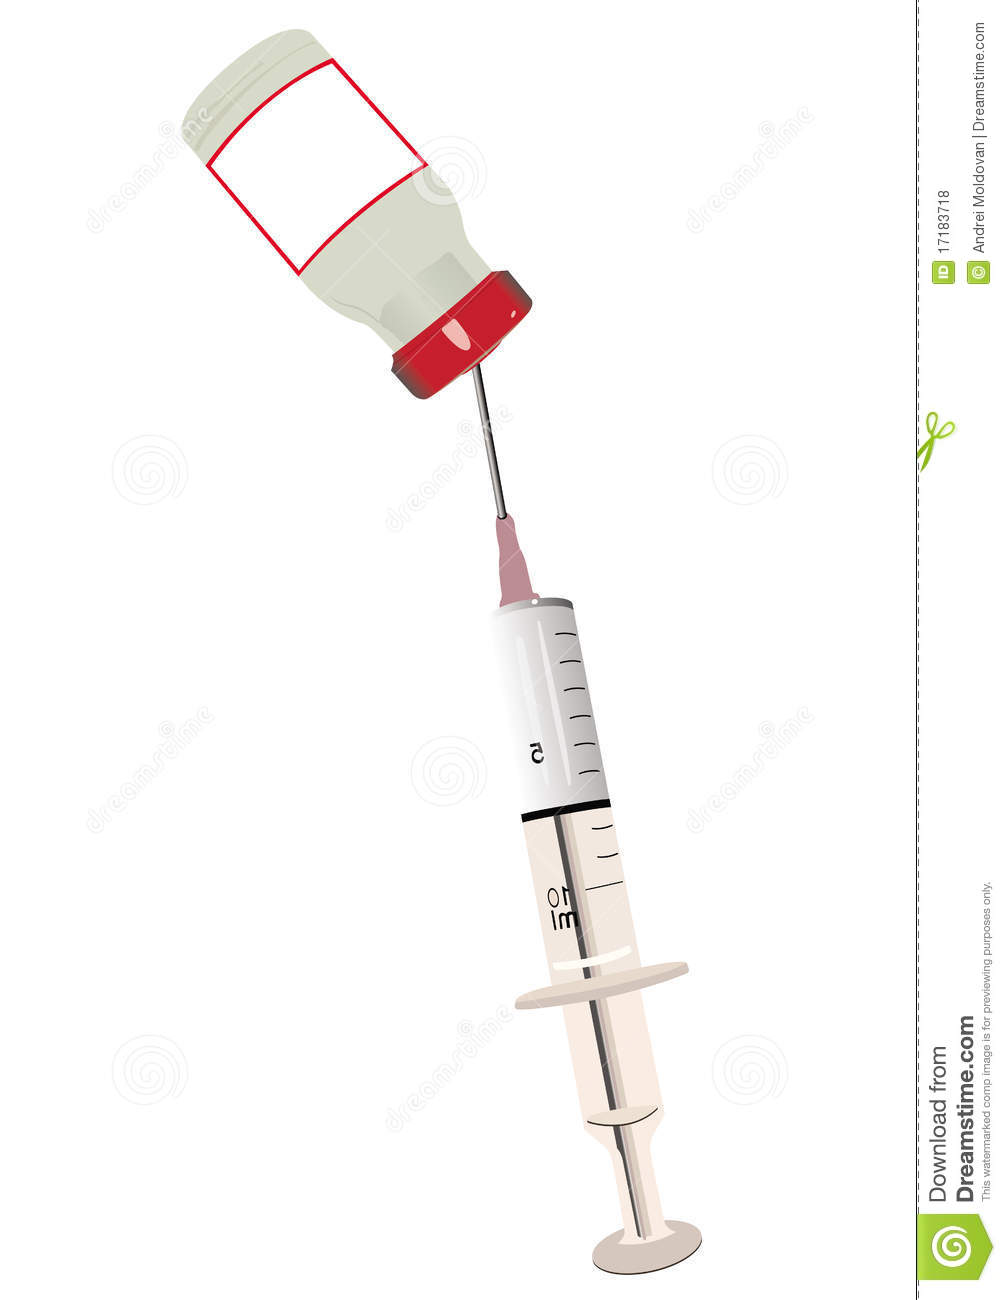 Syringe And Medicine Injection Royalty Free Stock Photos   Image